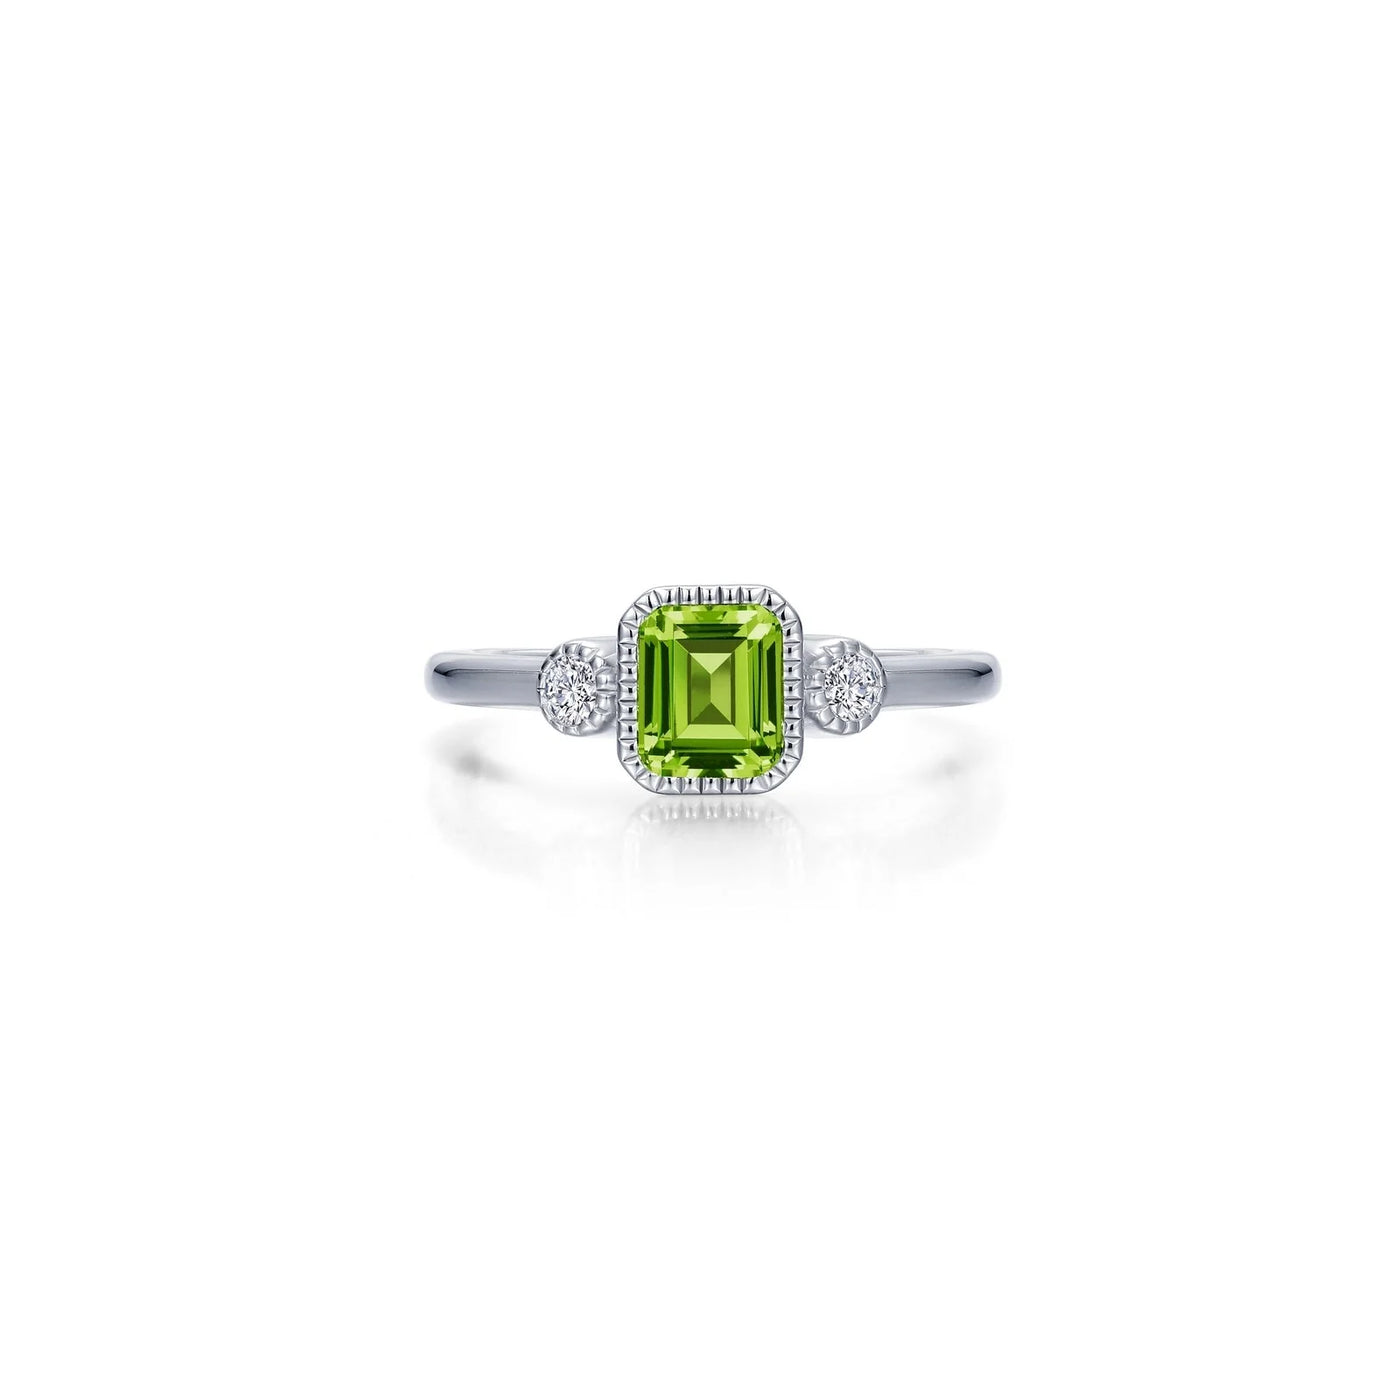 Simulated Emerald-Cut Peridot & Diamond August Birthstone Ring